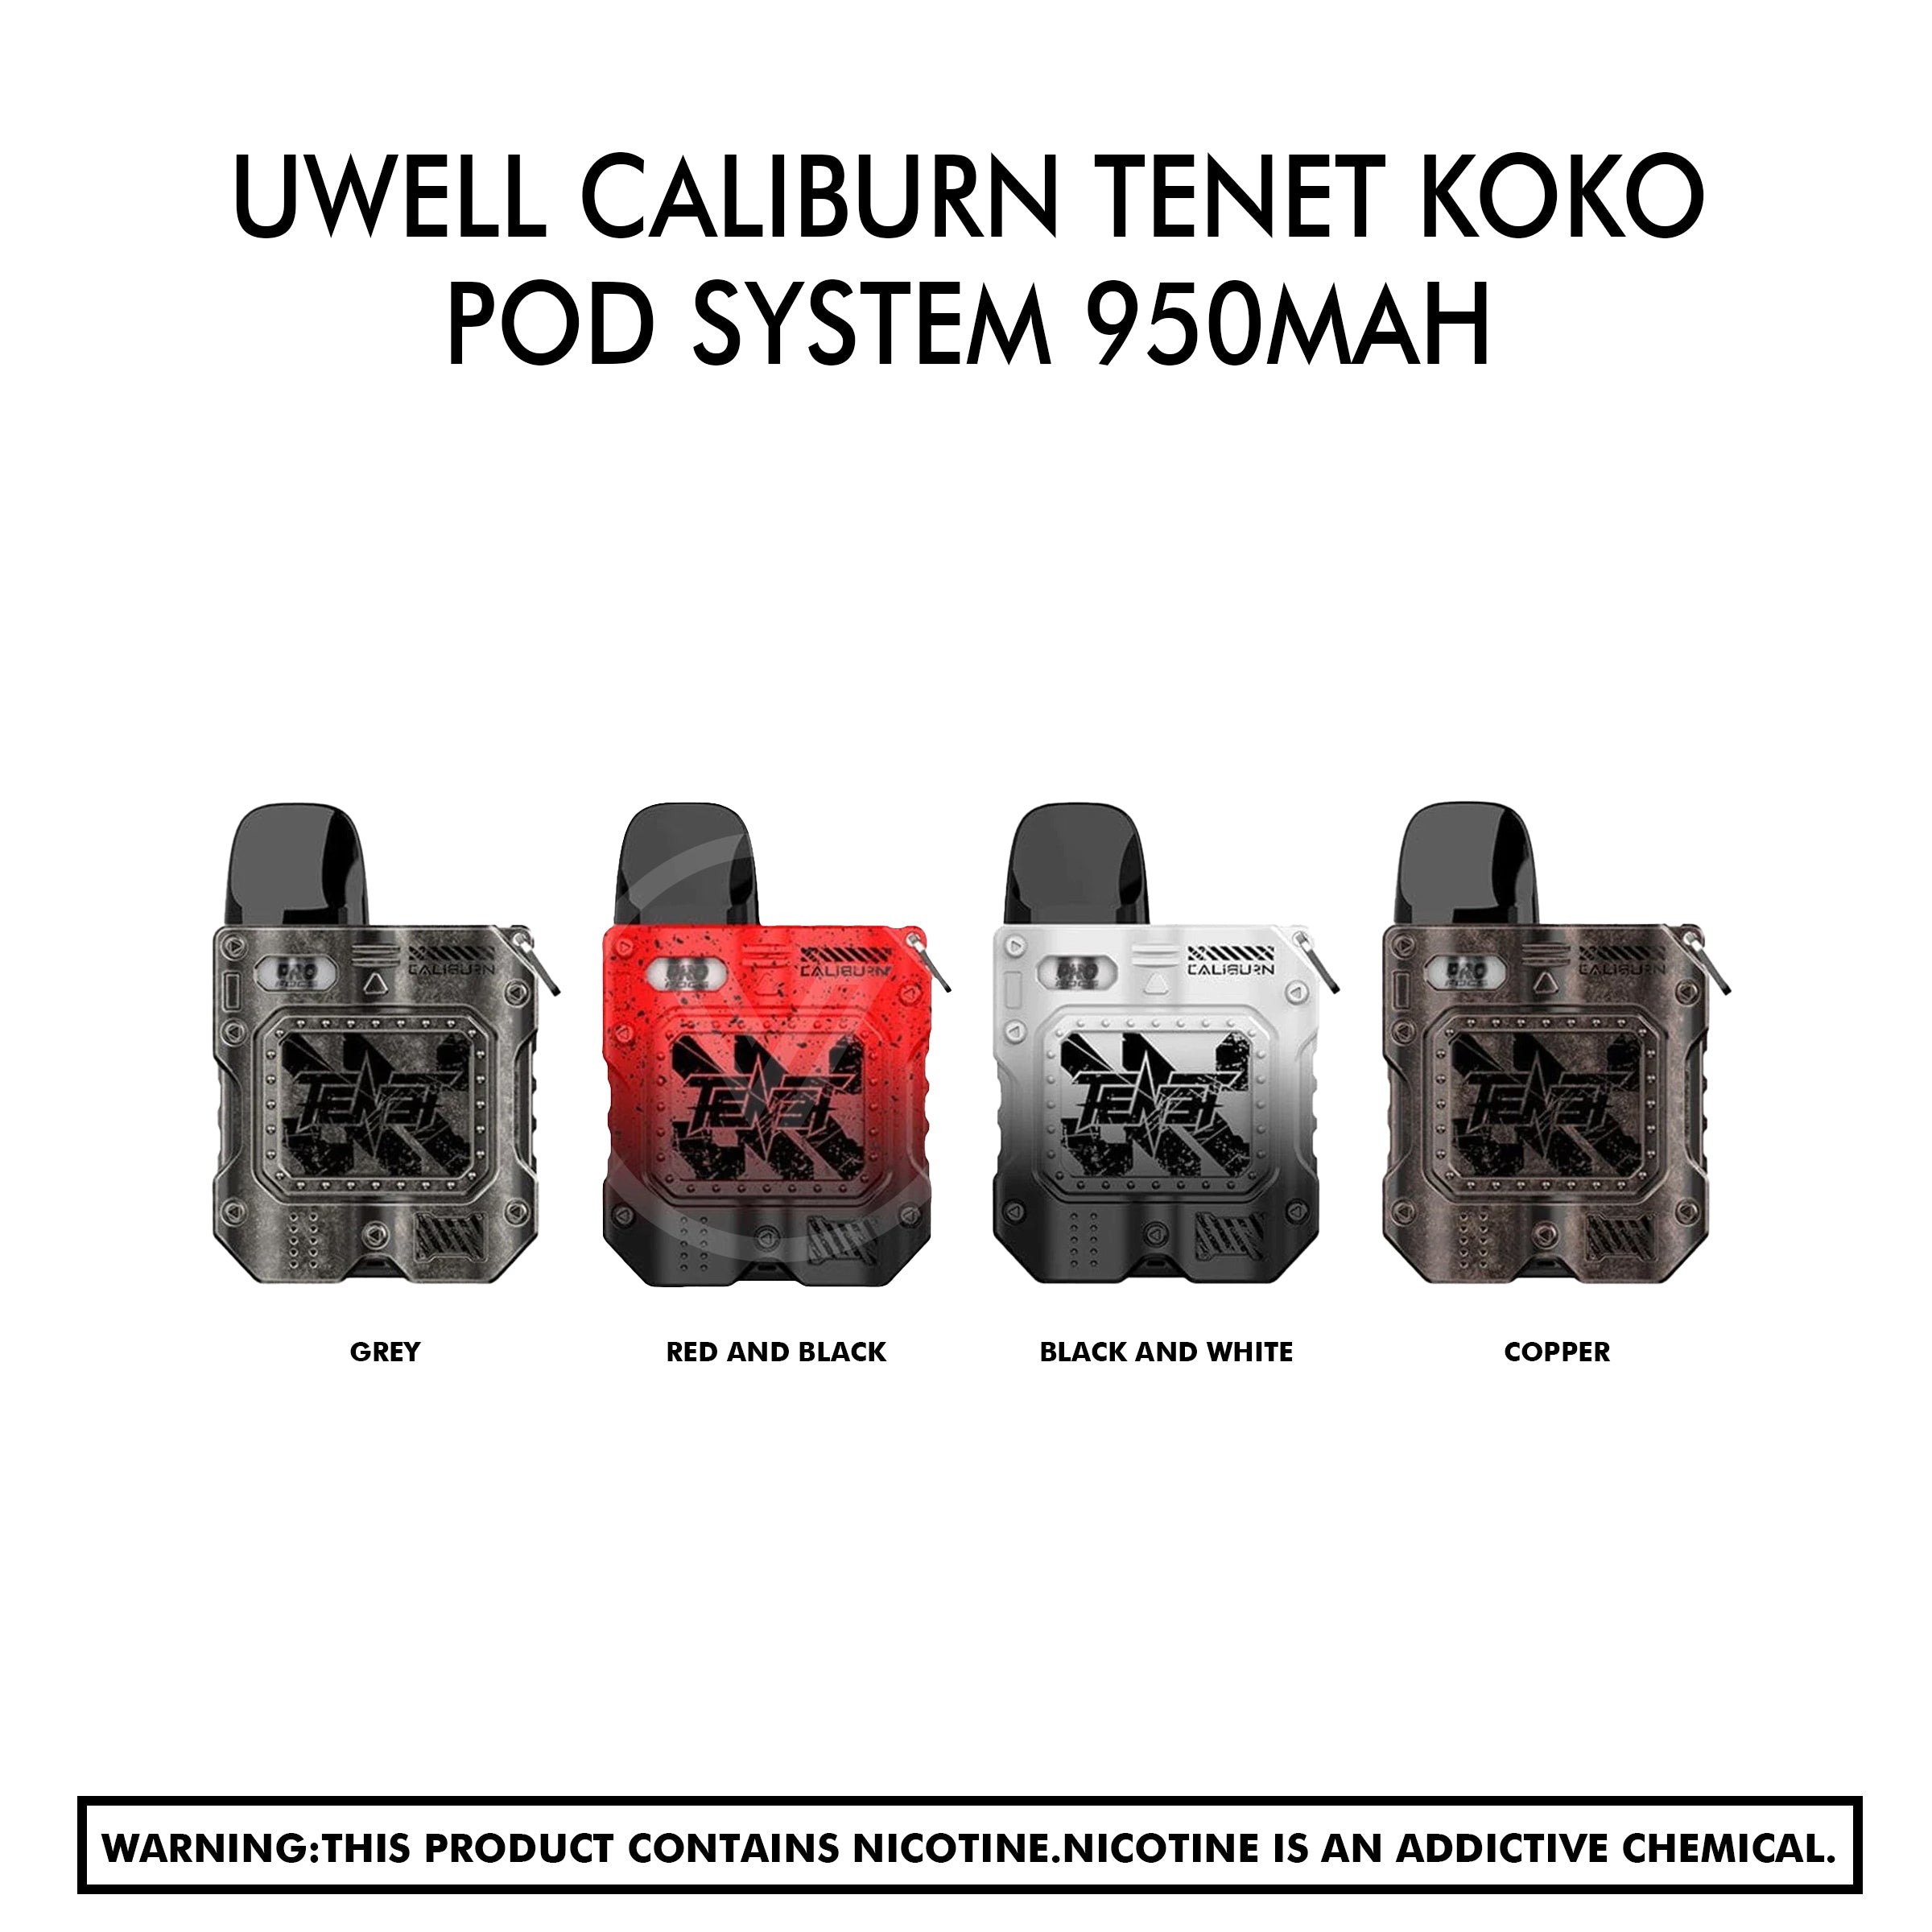 Uwell Caliburn Tenet Koko Pod System 950mAH